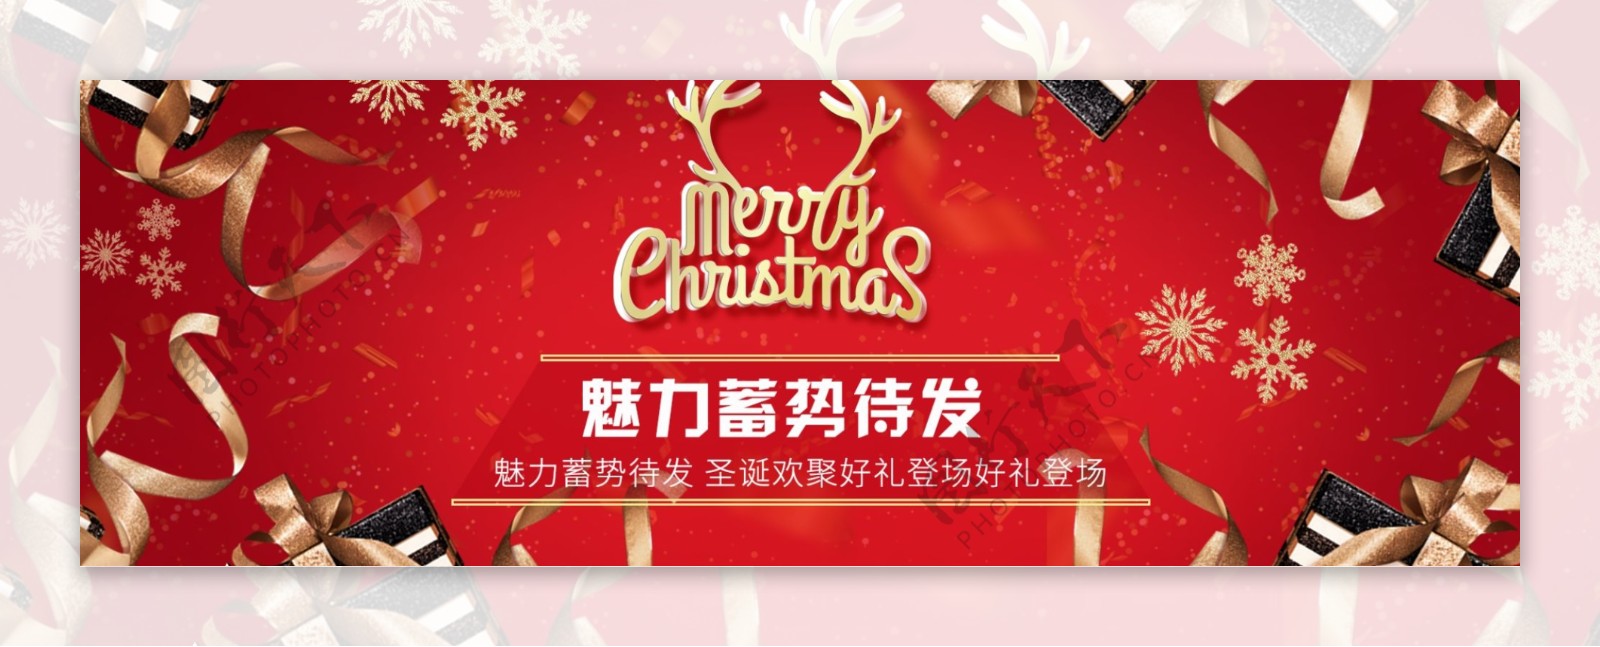 banner首页活动圣诞节蓄势待发红雪花